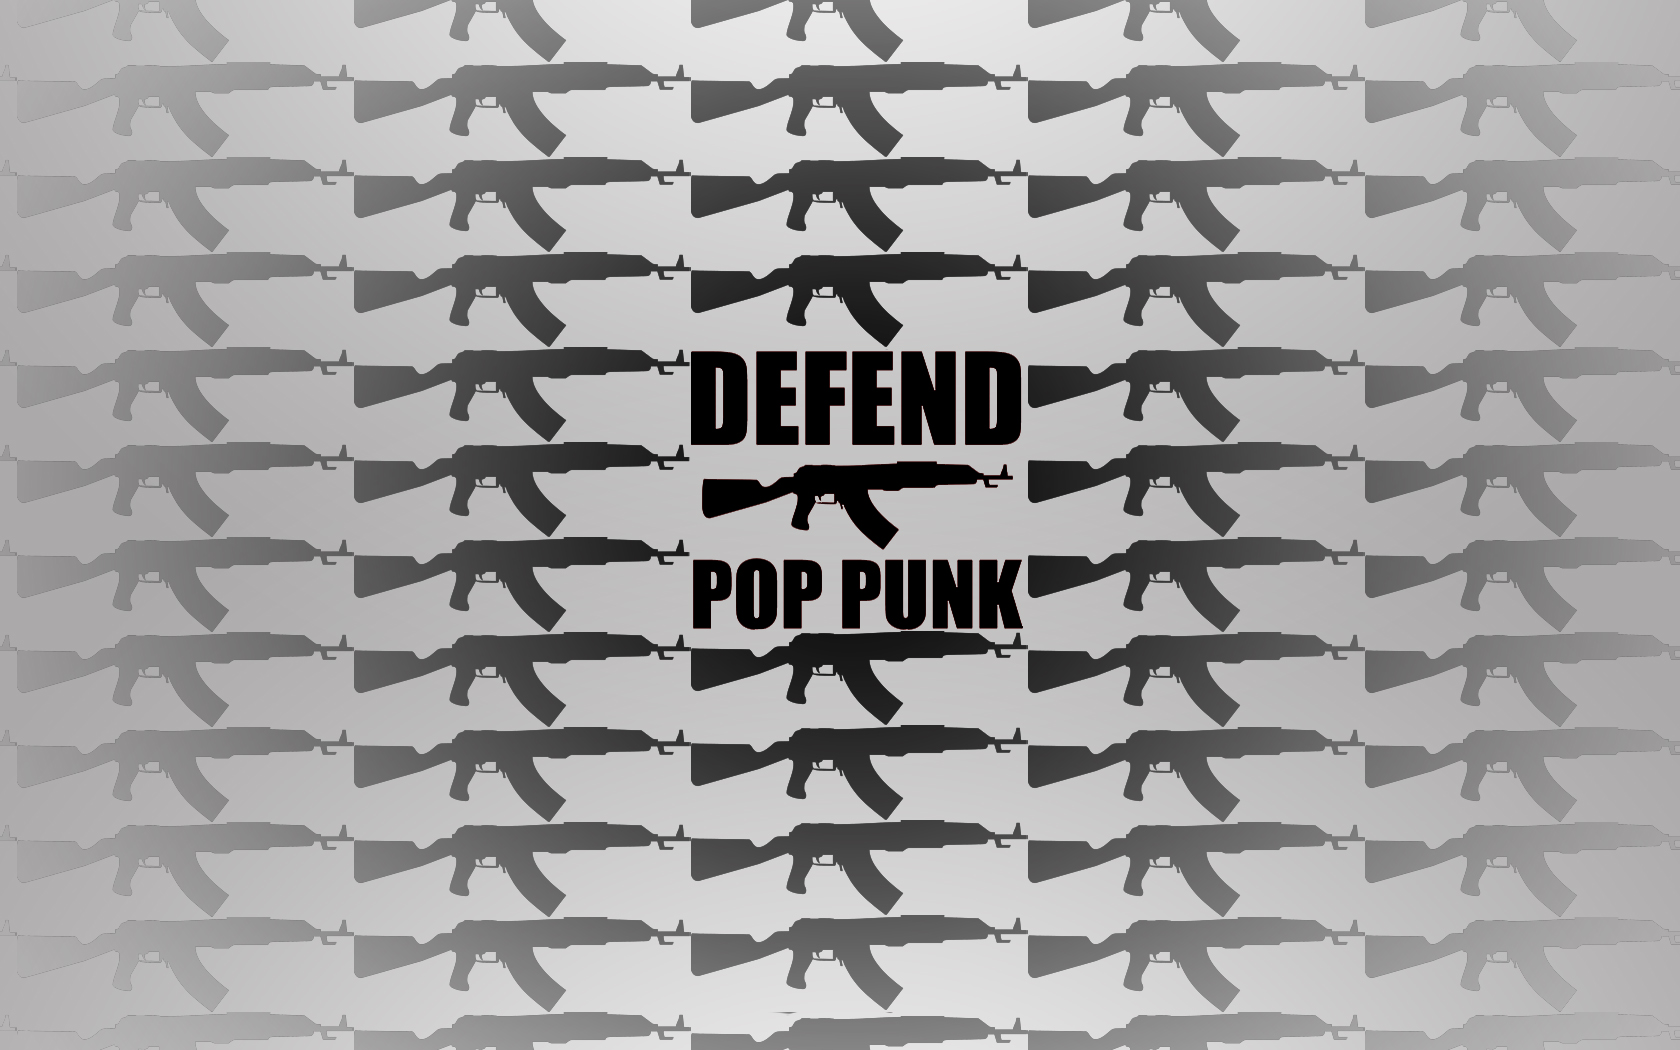 Defend Pop Punk by Pezfoo on DeviantArt